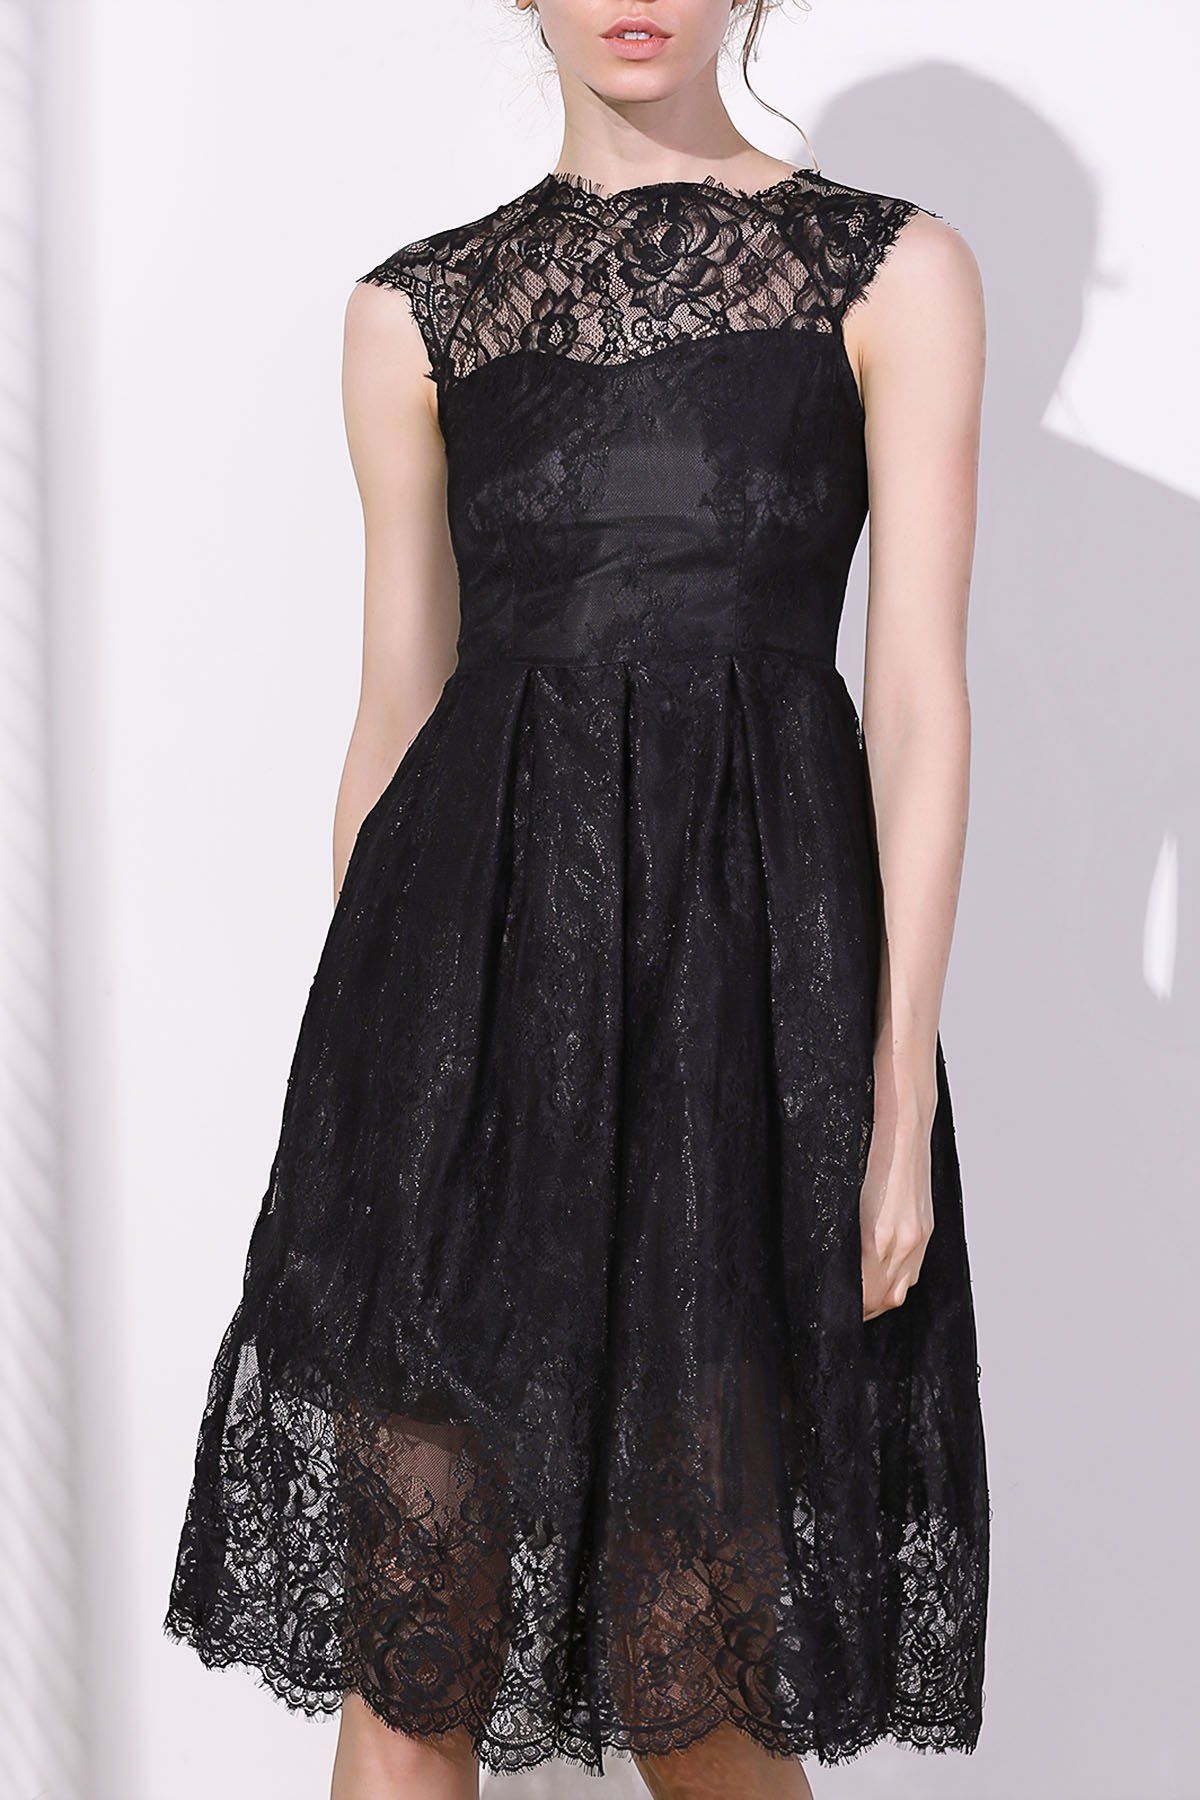 Black Xl Lace Short A Line Prom Dress | RoseGal.com
